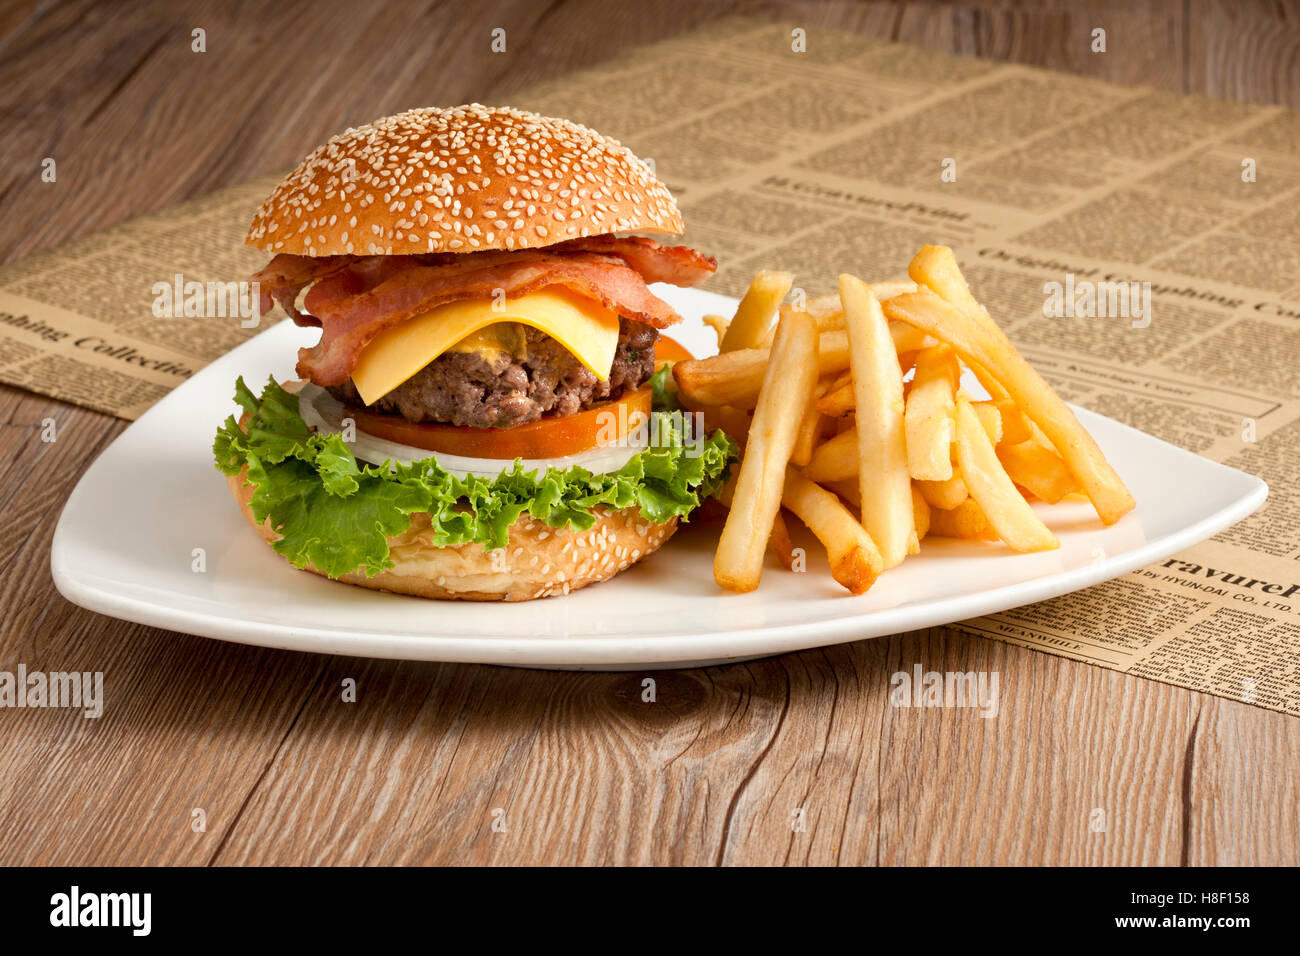 Burger avec frites on white plate Banque D'Images